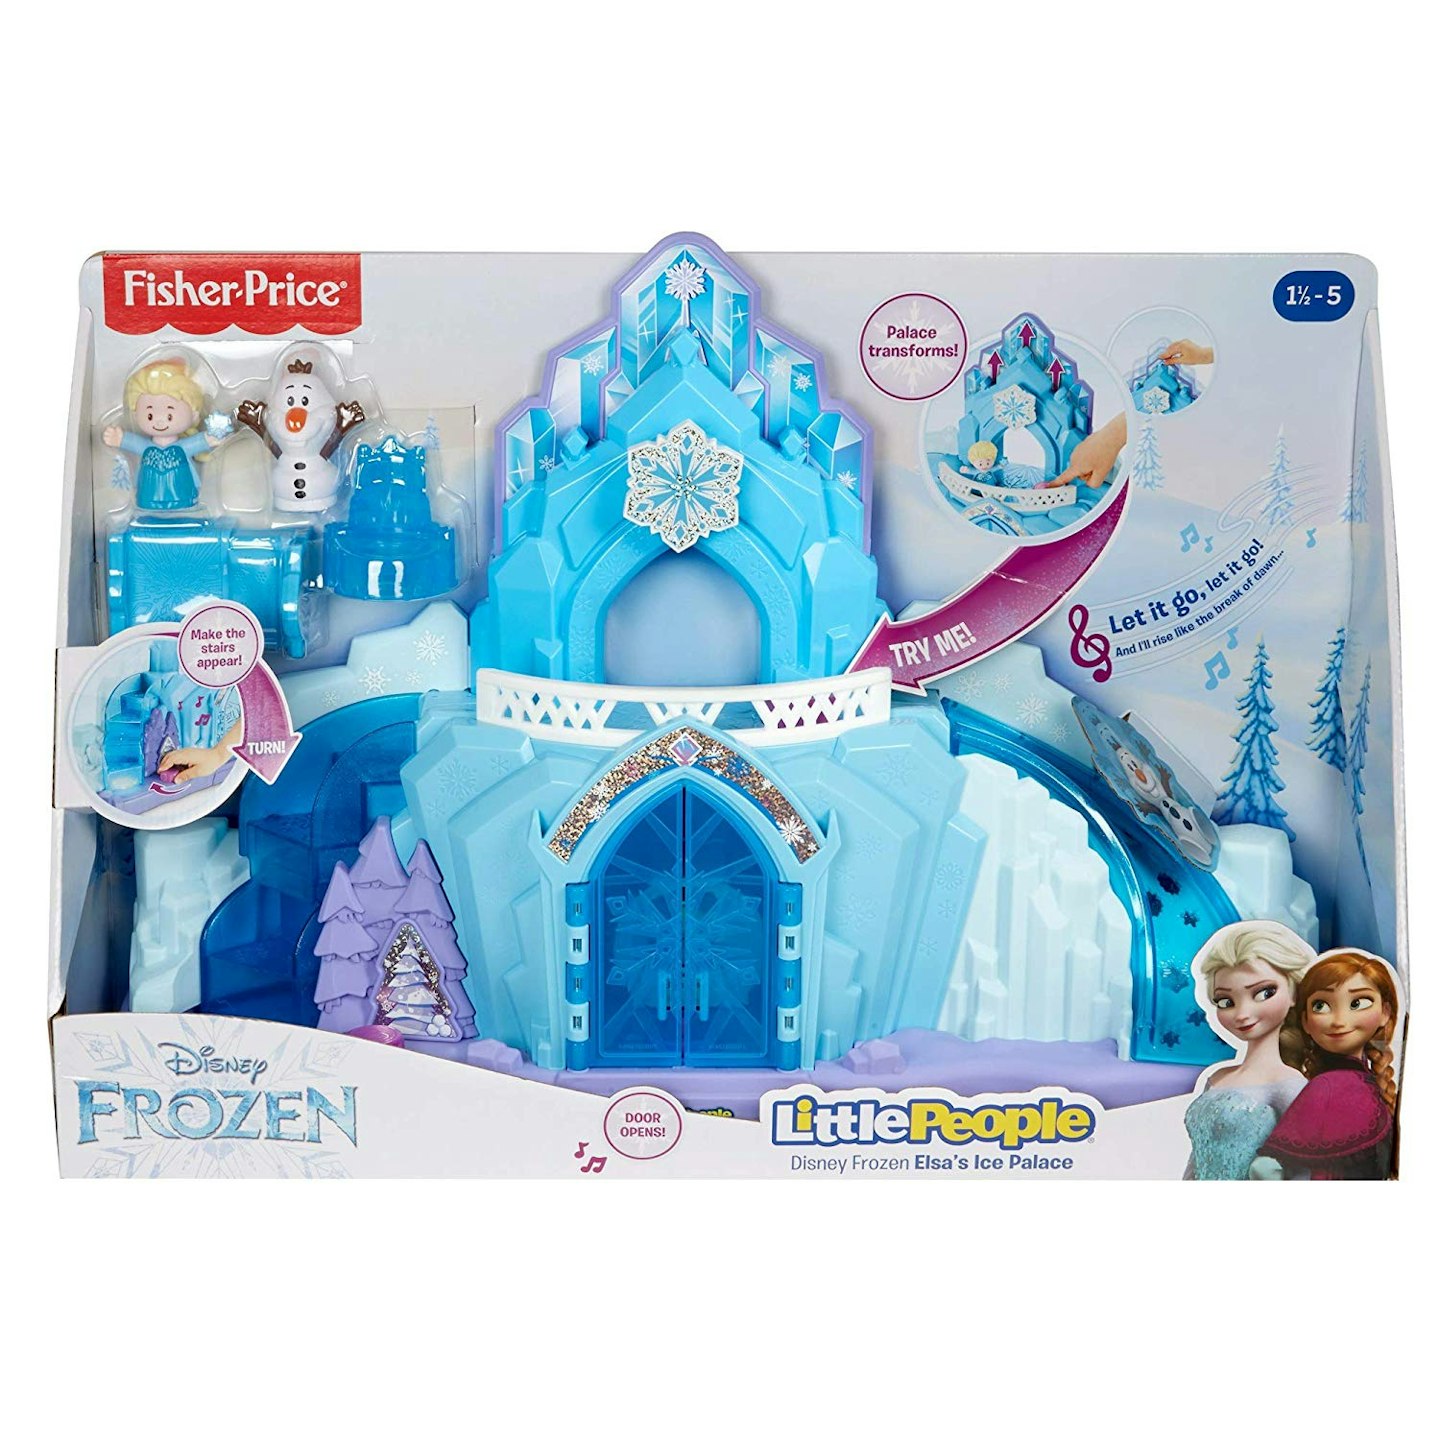 Little People Fisher-Price Disney Frozen Elsa's Ice Palace, 34.97